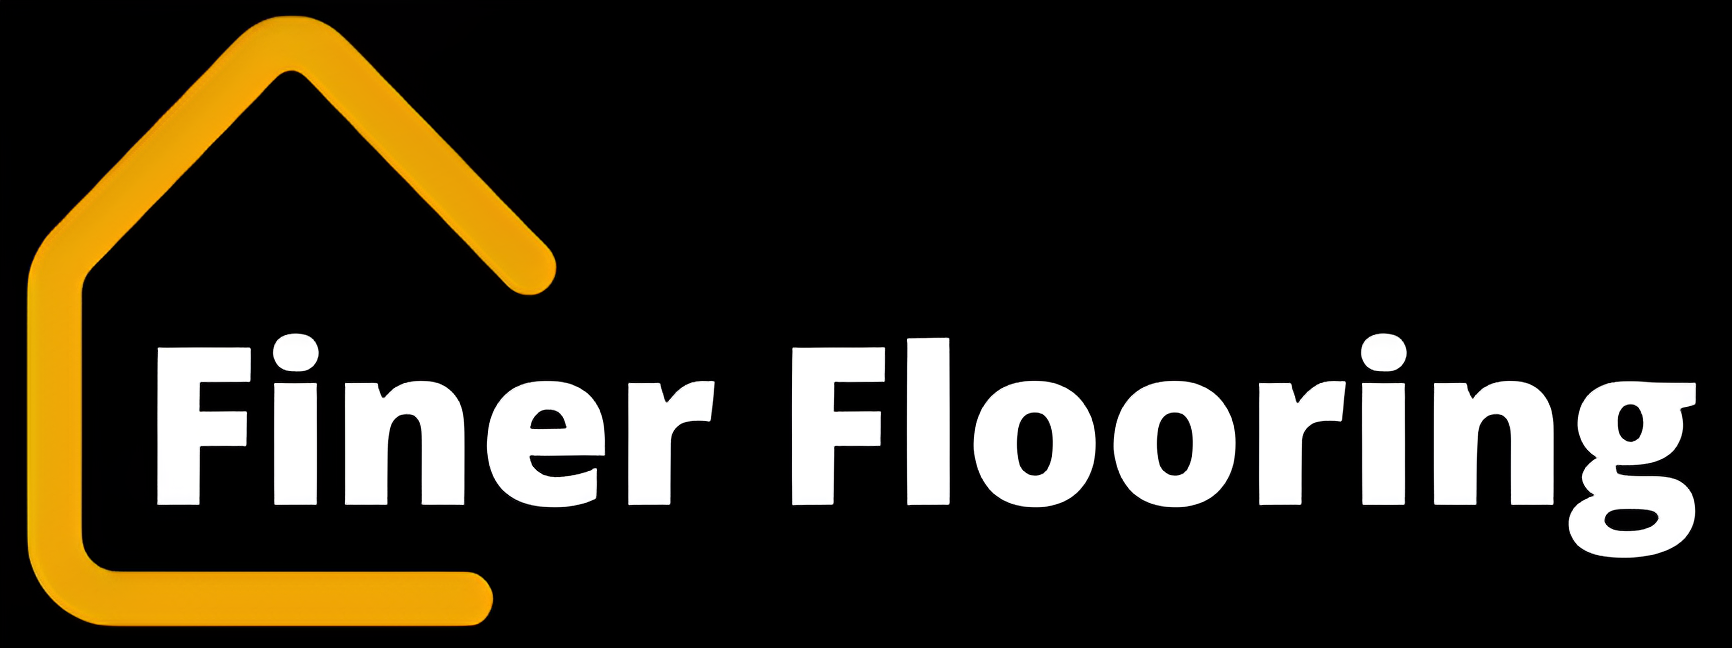 Finer Flooring Company 